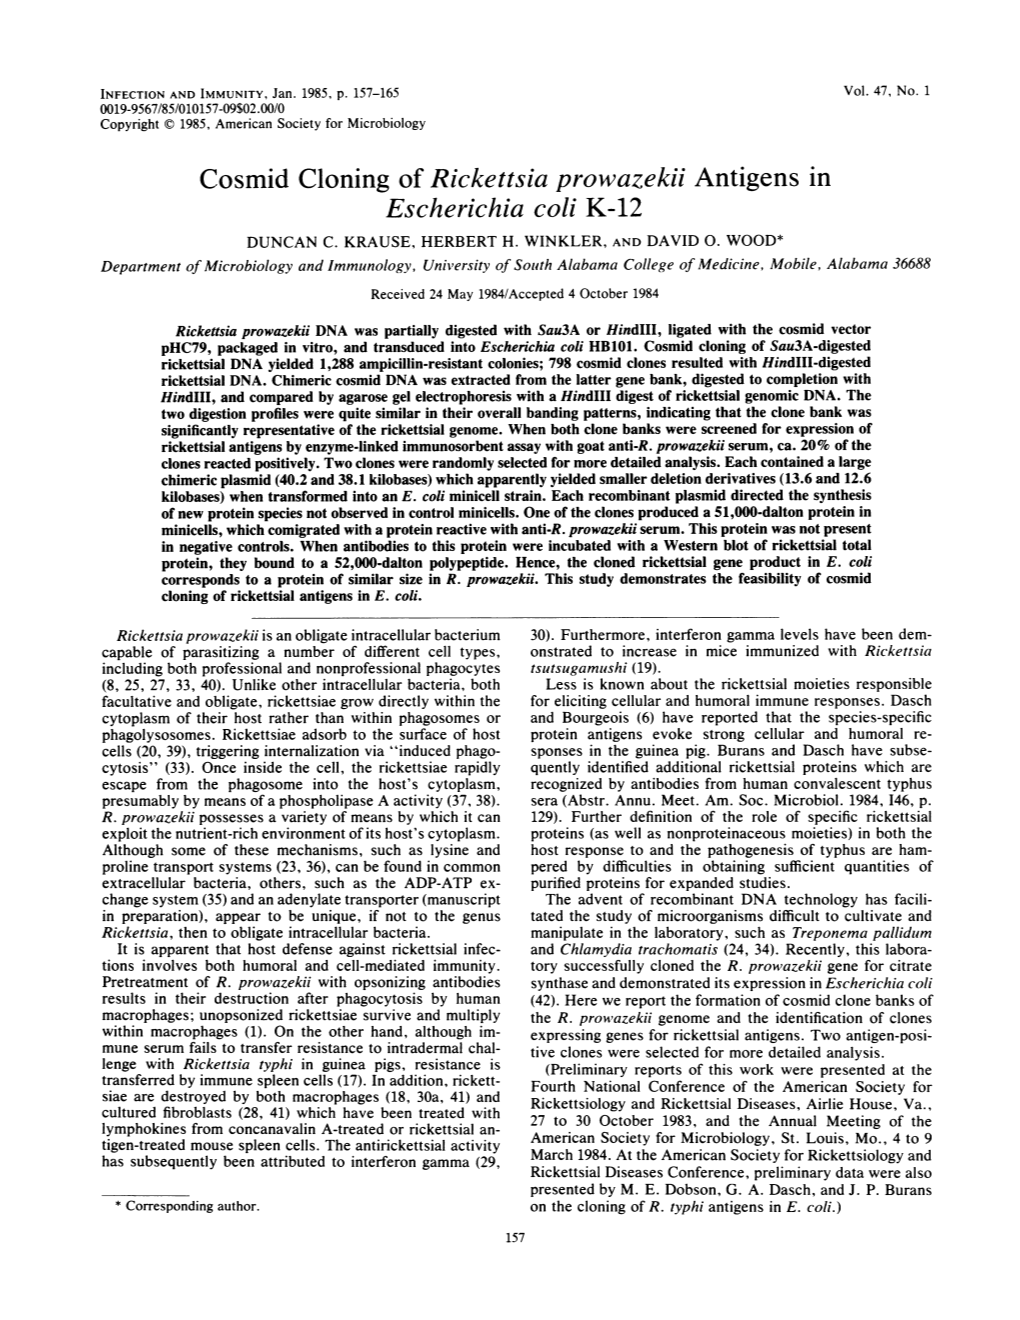 Cosmid Cloning of Rickettsia Prowazekii Antigens in Escherichia Coli K-12 DUNCAN C